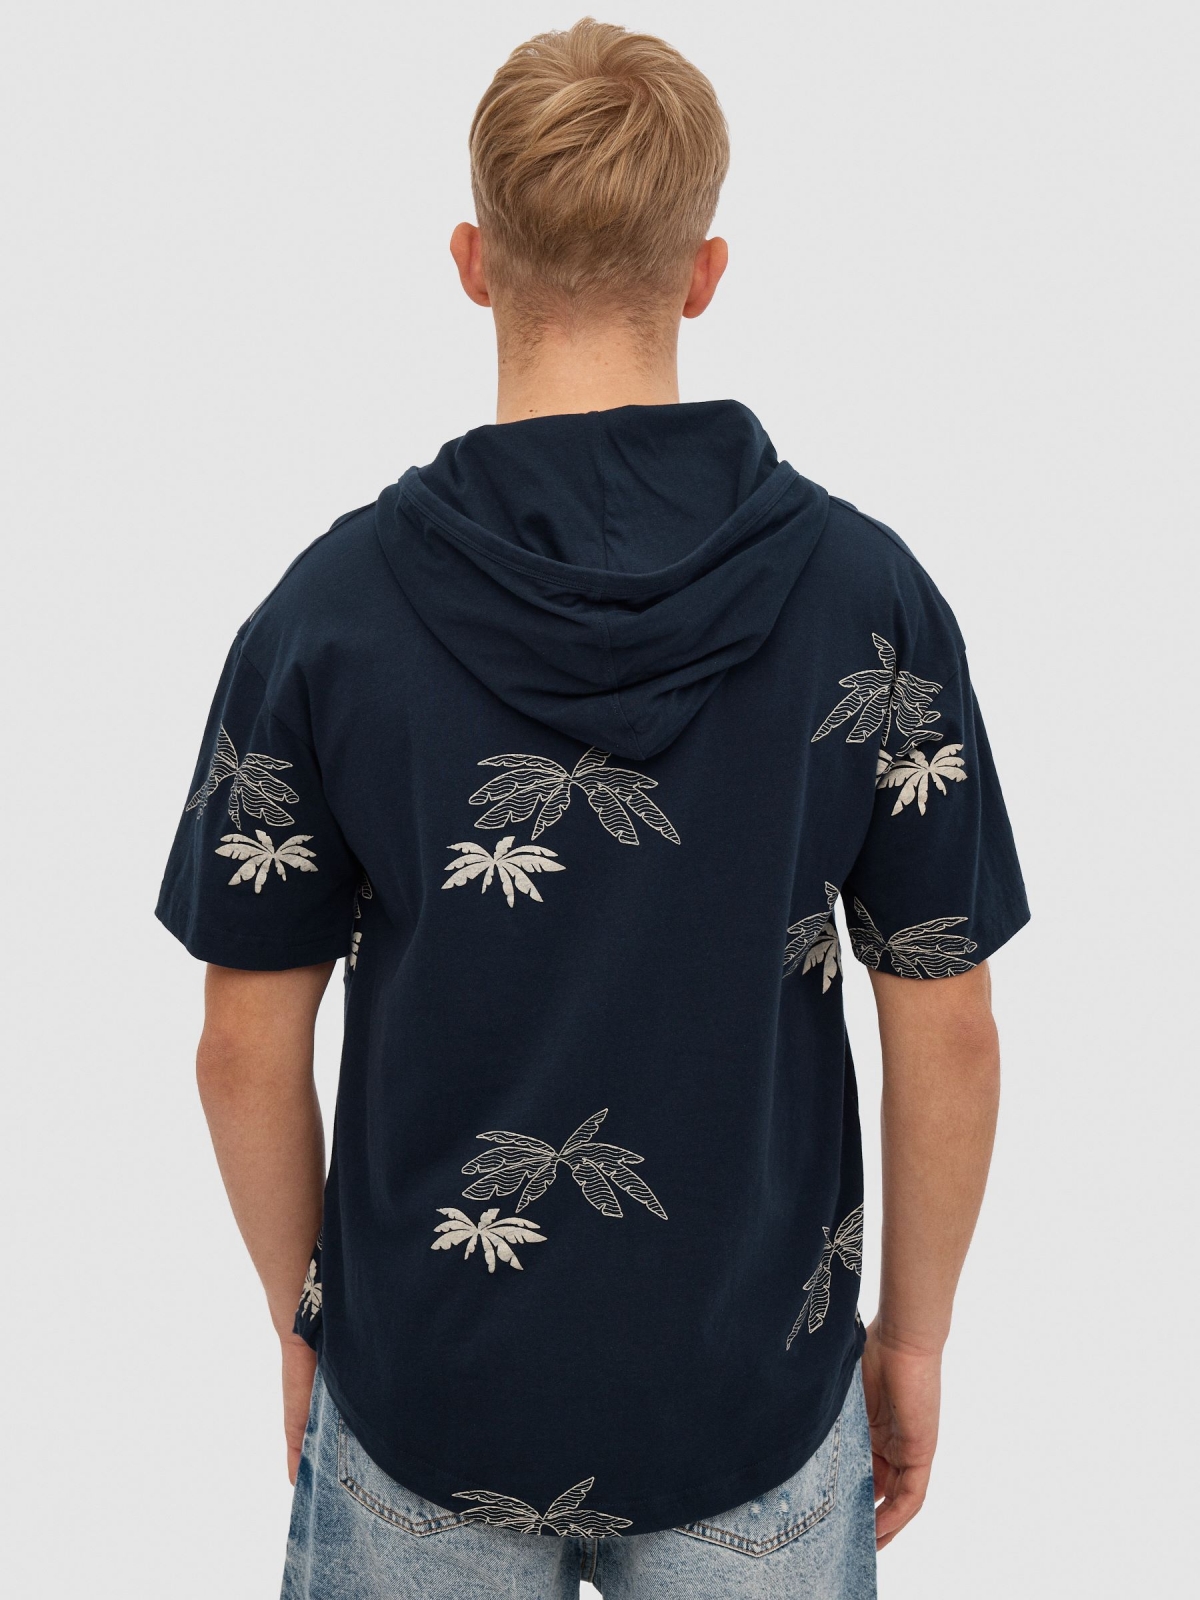 Camiseta palmeras con capucha azul marino vista media trasera